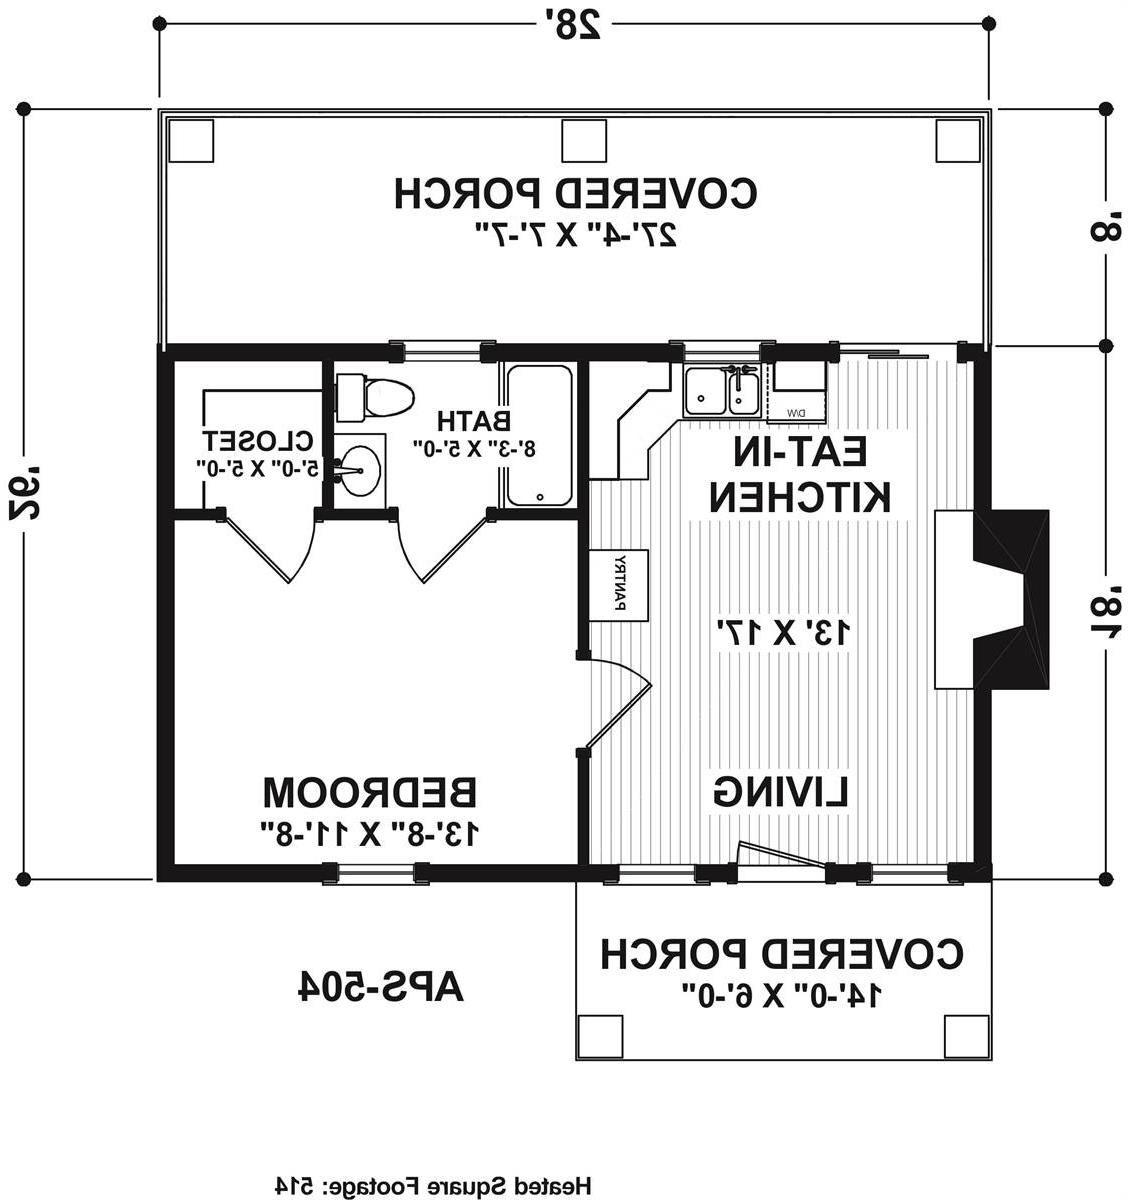 Main Level Floor Plan image of Keyingham Cottage House Plan